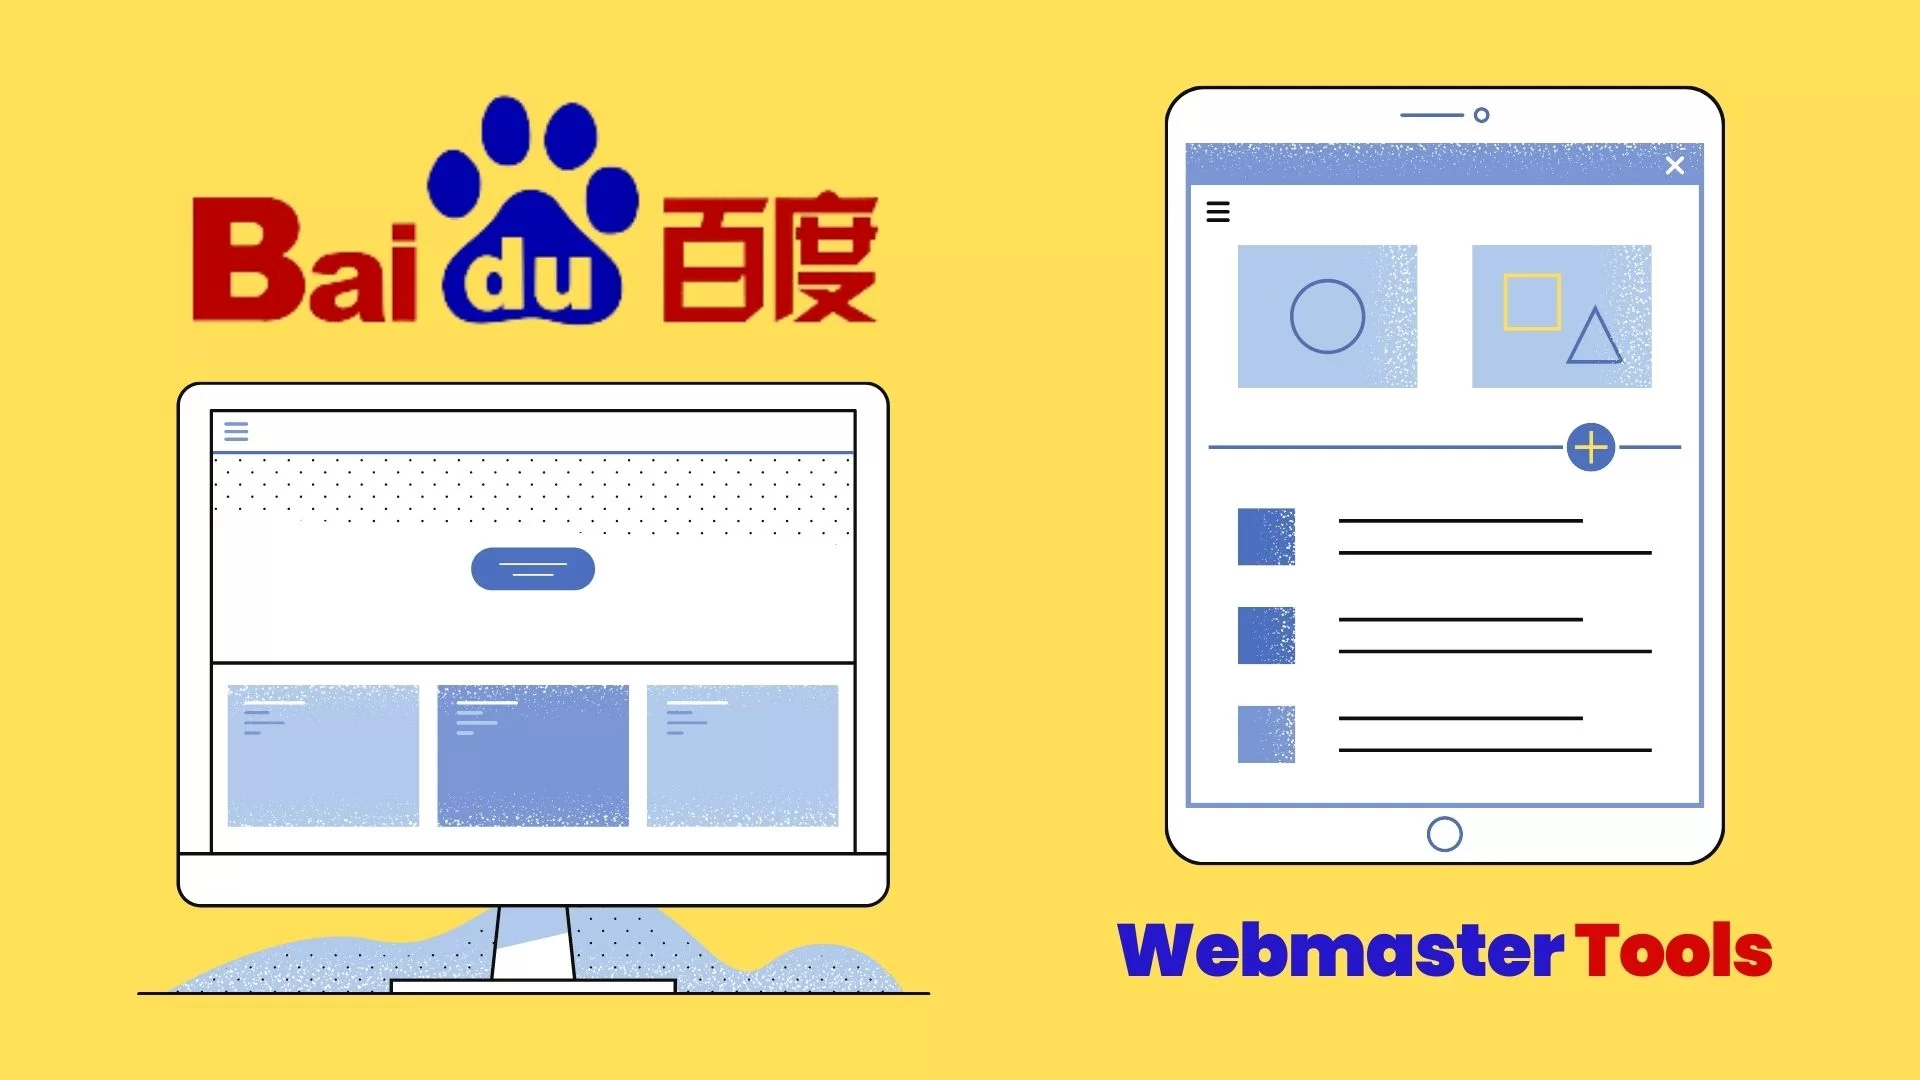 What Is Baidu Webmaster Tools?